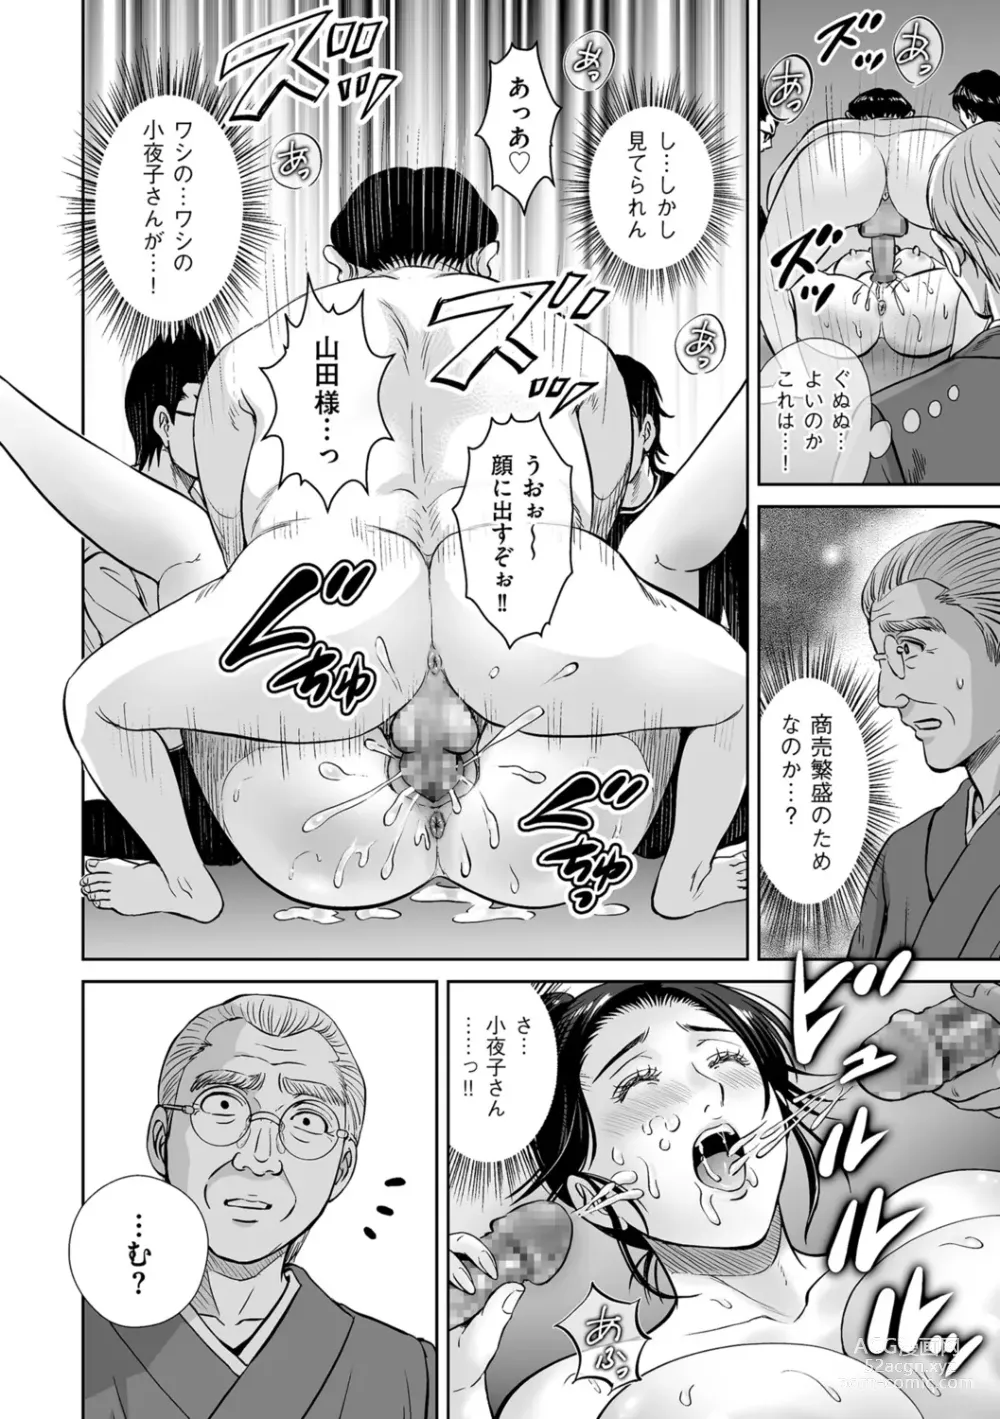 Page 188 of manga Mesuzakari no Haha-tachi e